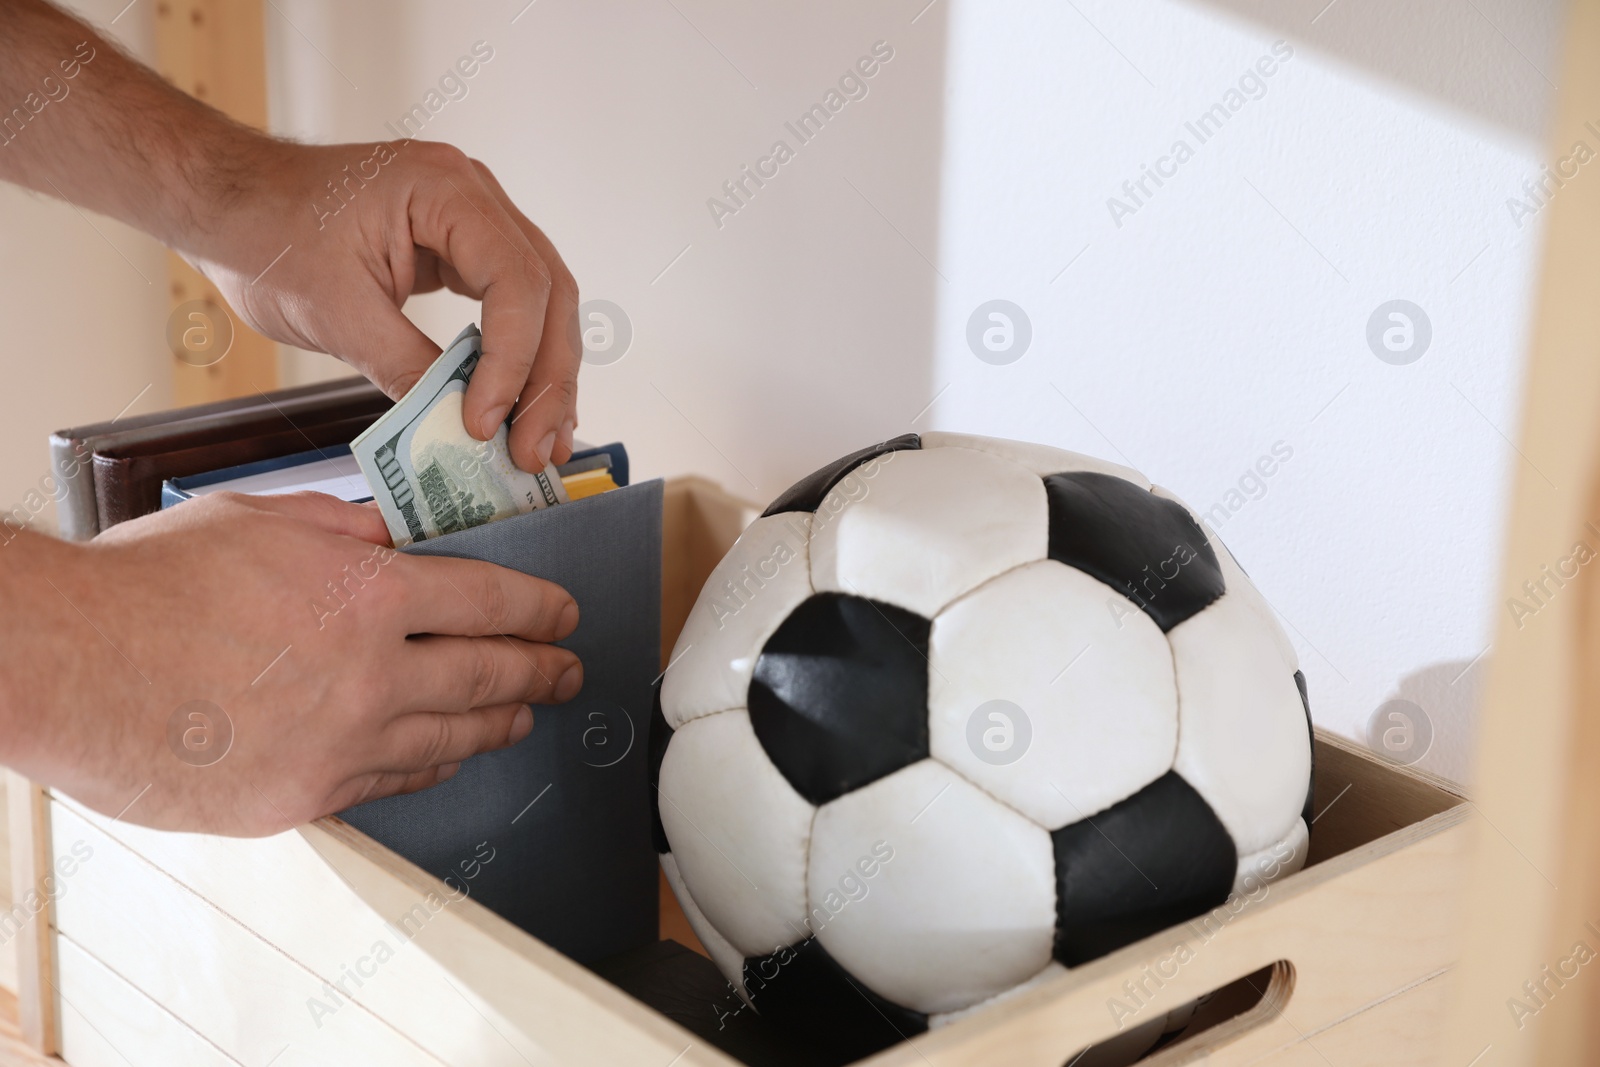 Photo of Man hiding money in book indoors, closeup. Financial savings